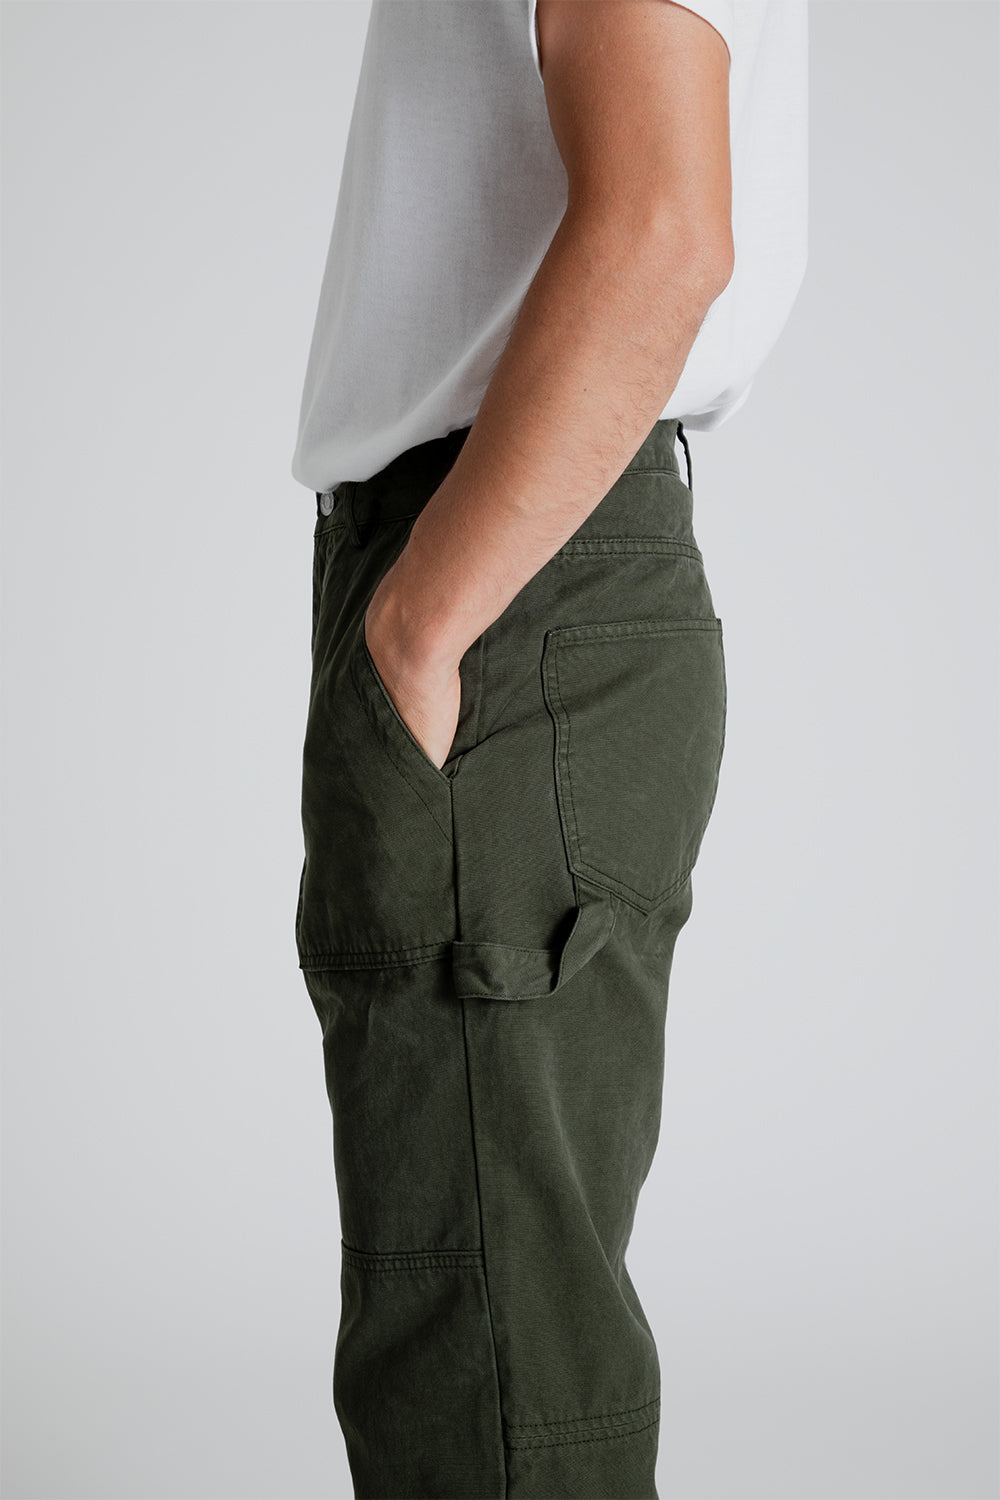 Schnayderman's Trousers Workwear Stone Washed in Dark Green